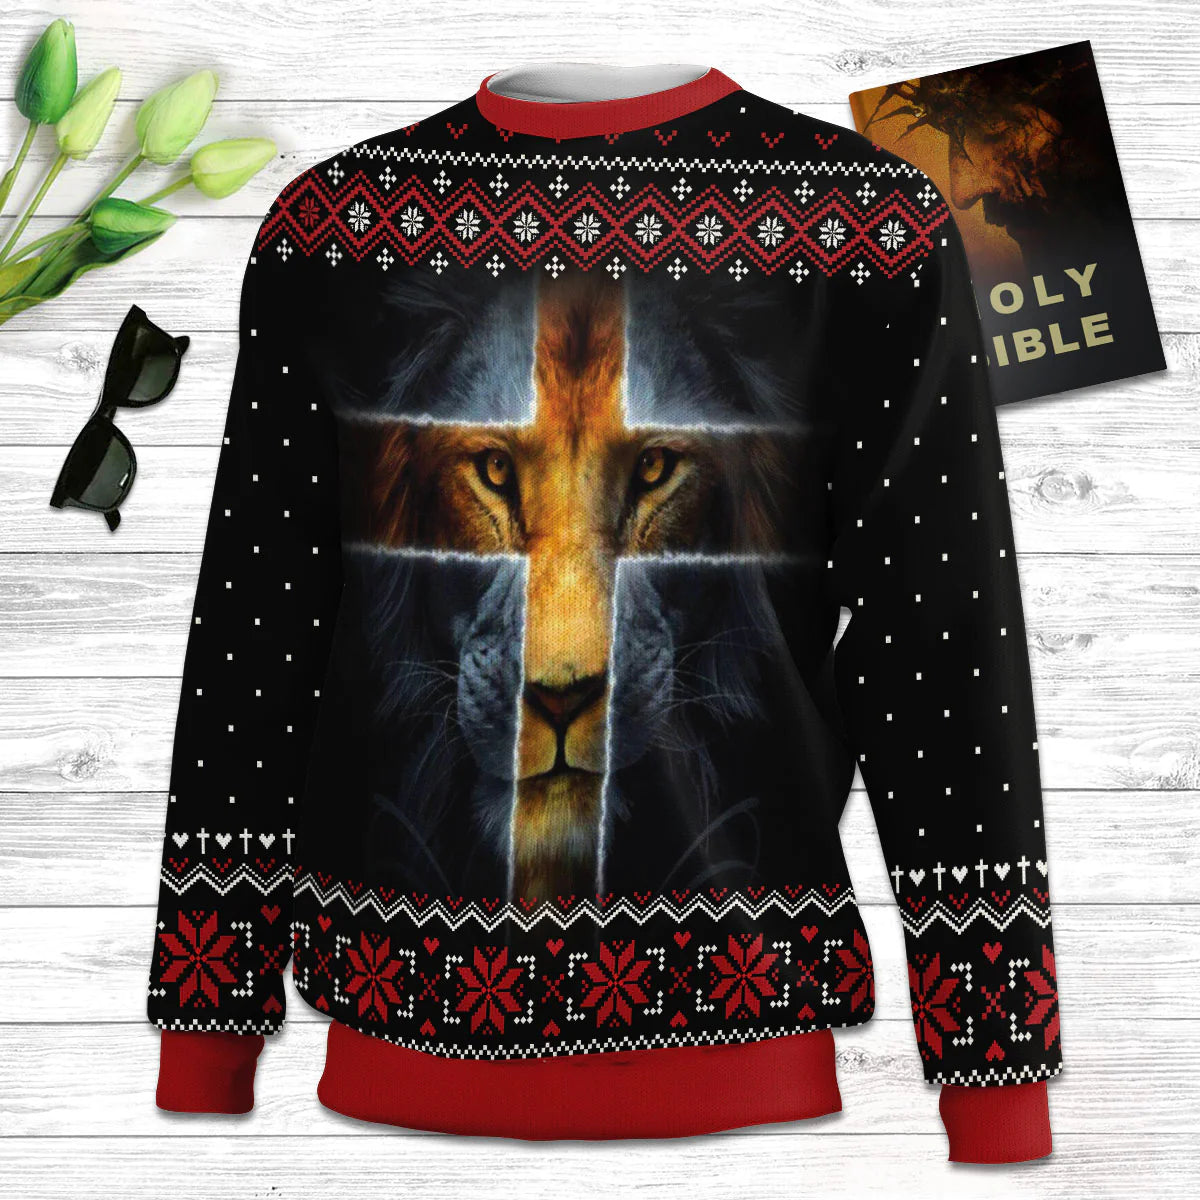 Christianartbag 3D Sweater, My God‘s Not Dead, He’s Surely Alive, Unisex Sweater, Christmas Gift. - Christian Art Bag